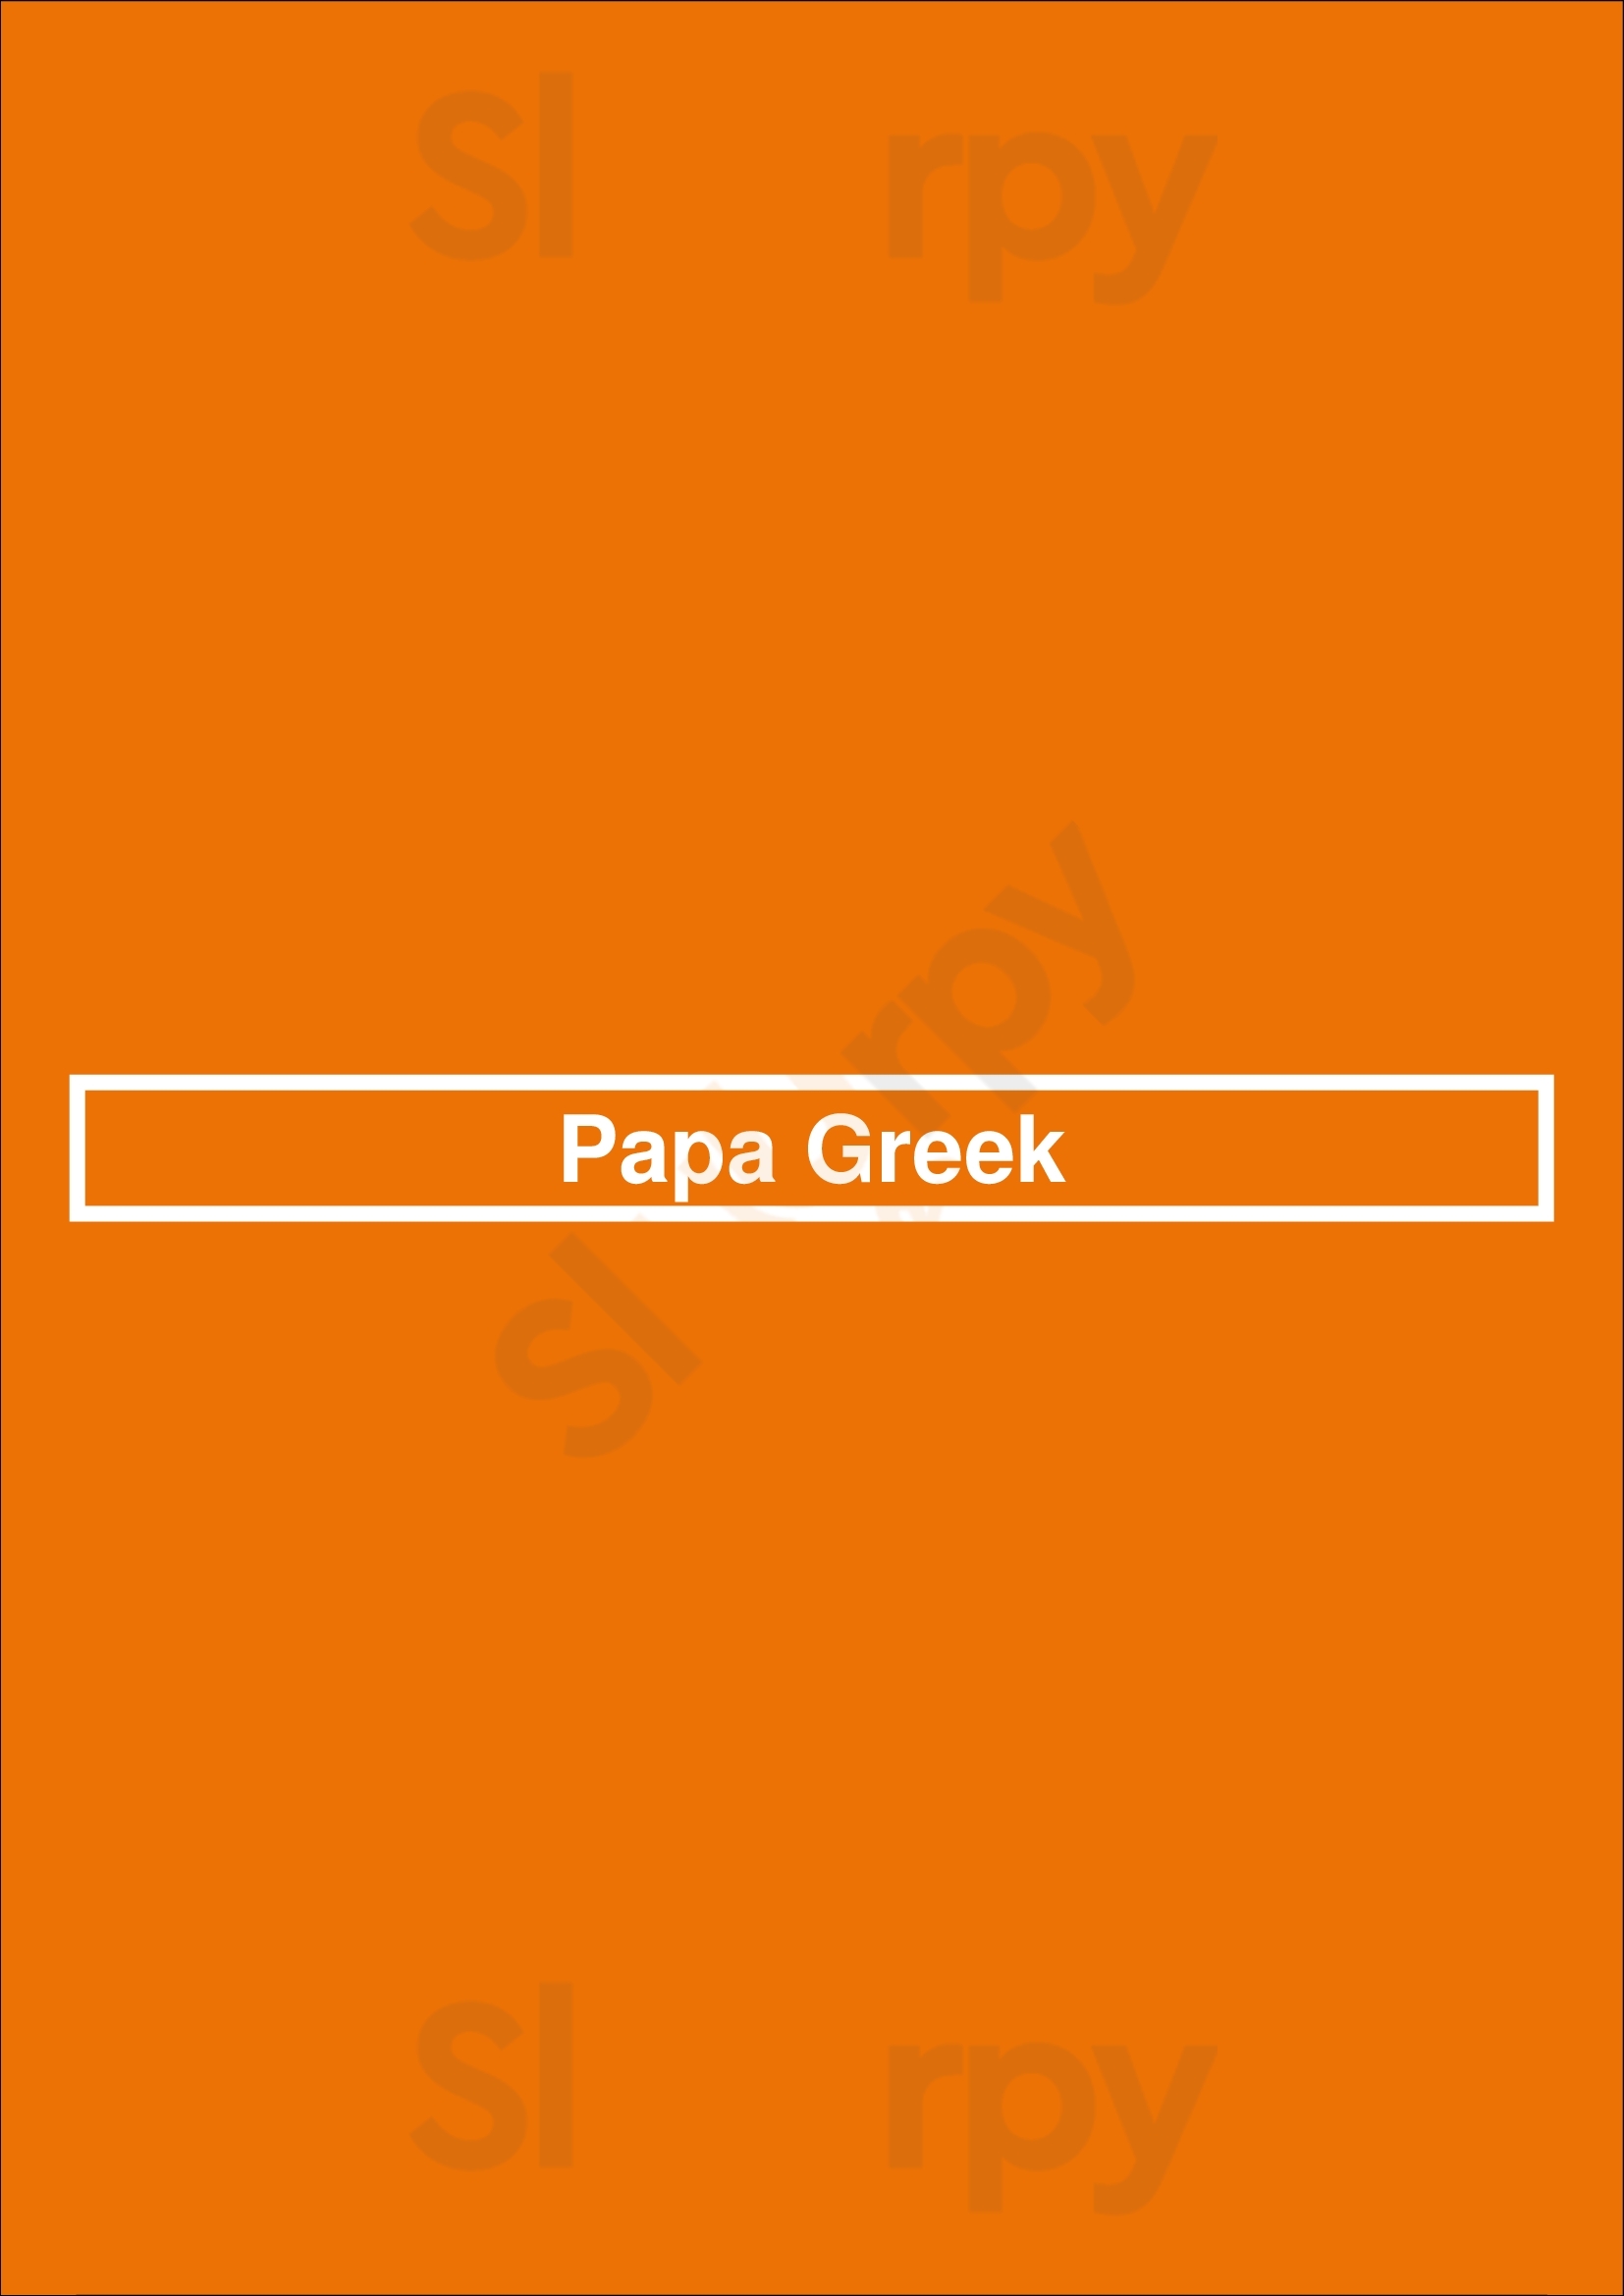 Papa Greek Burnaby Menu - 1